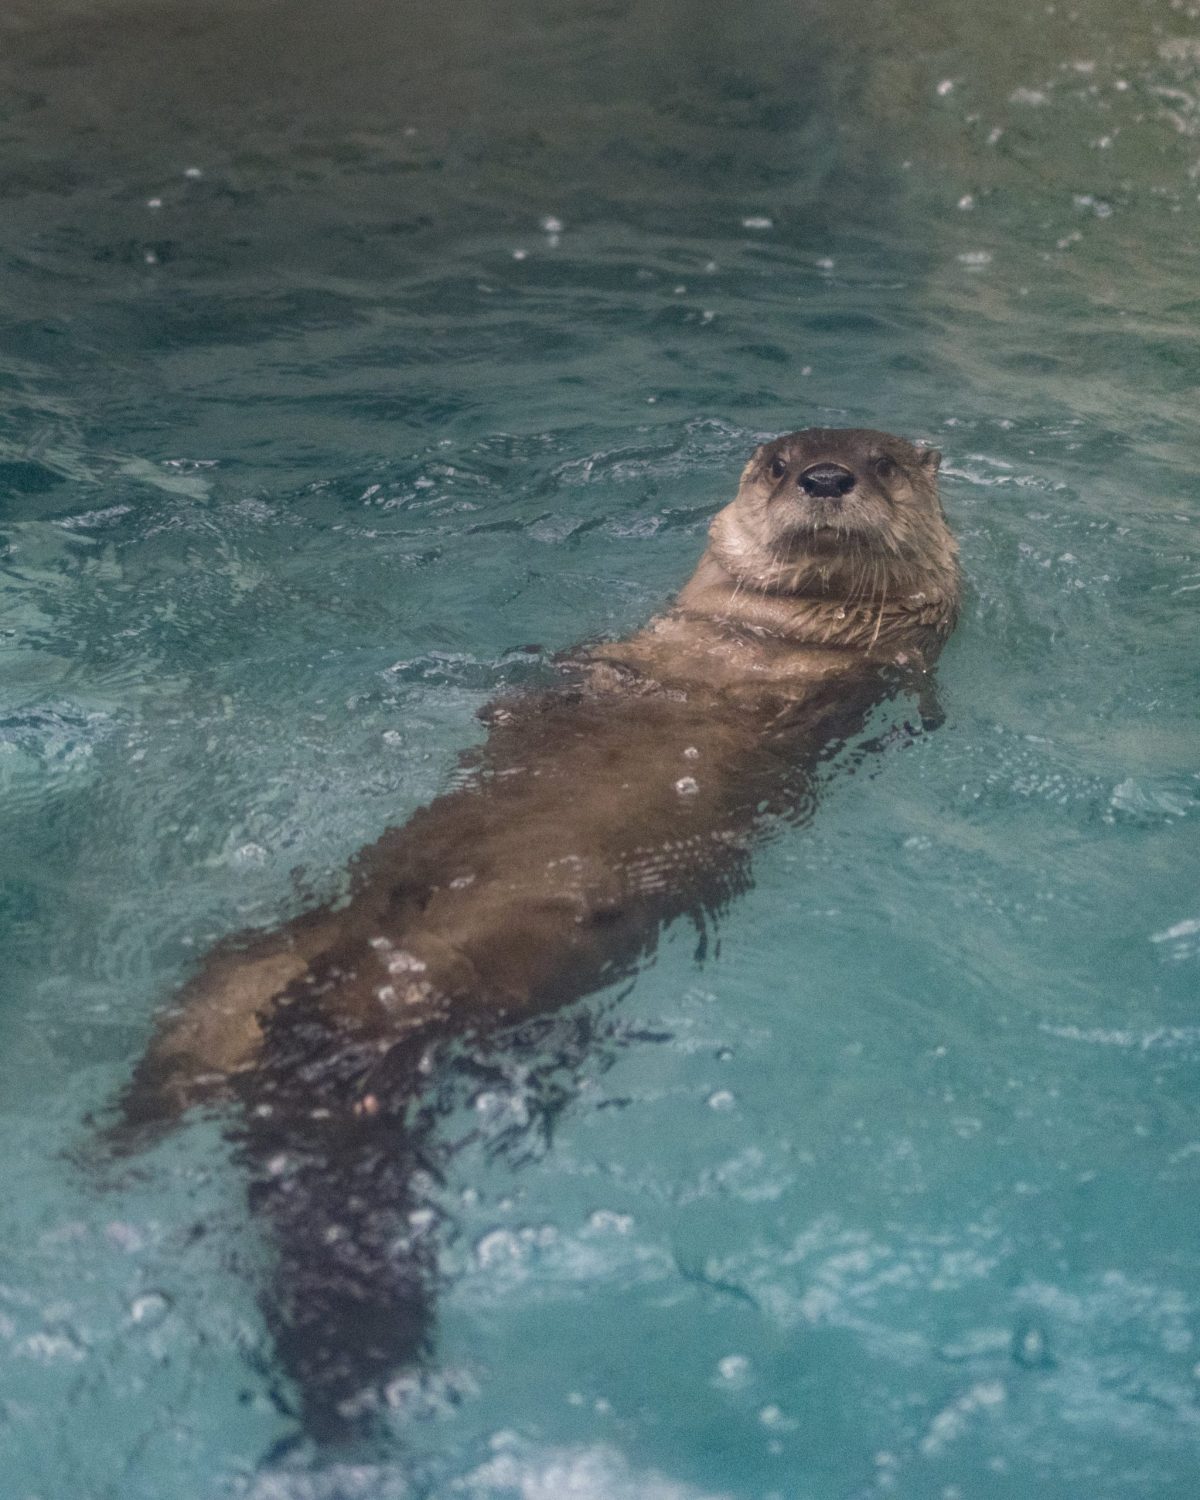 Delmar the North American River Otter at the Tennessee Aquarium